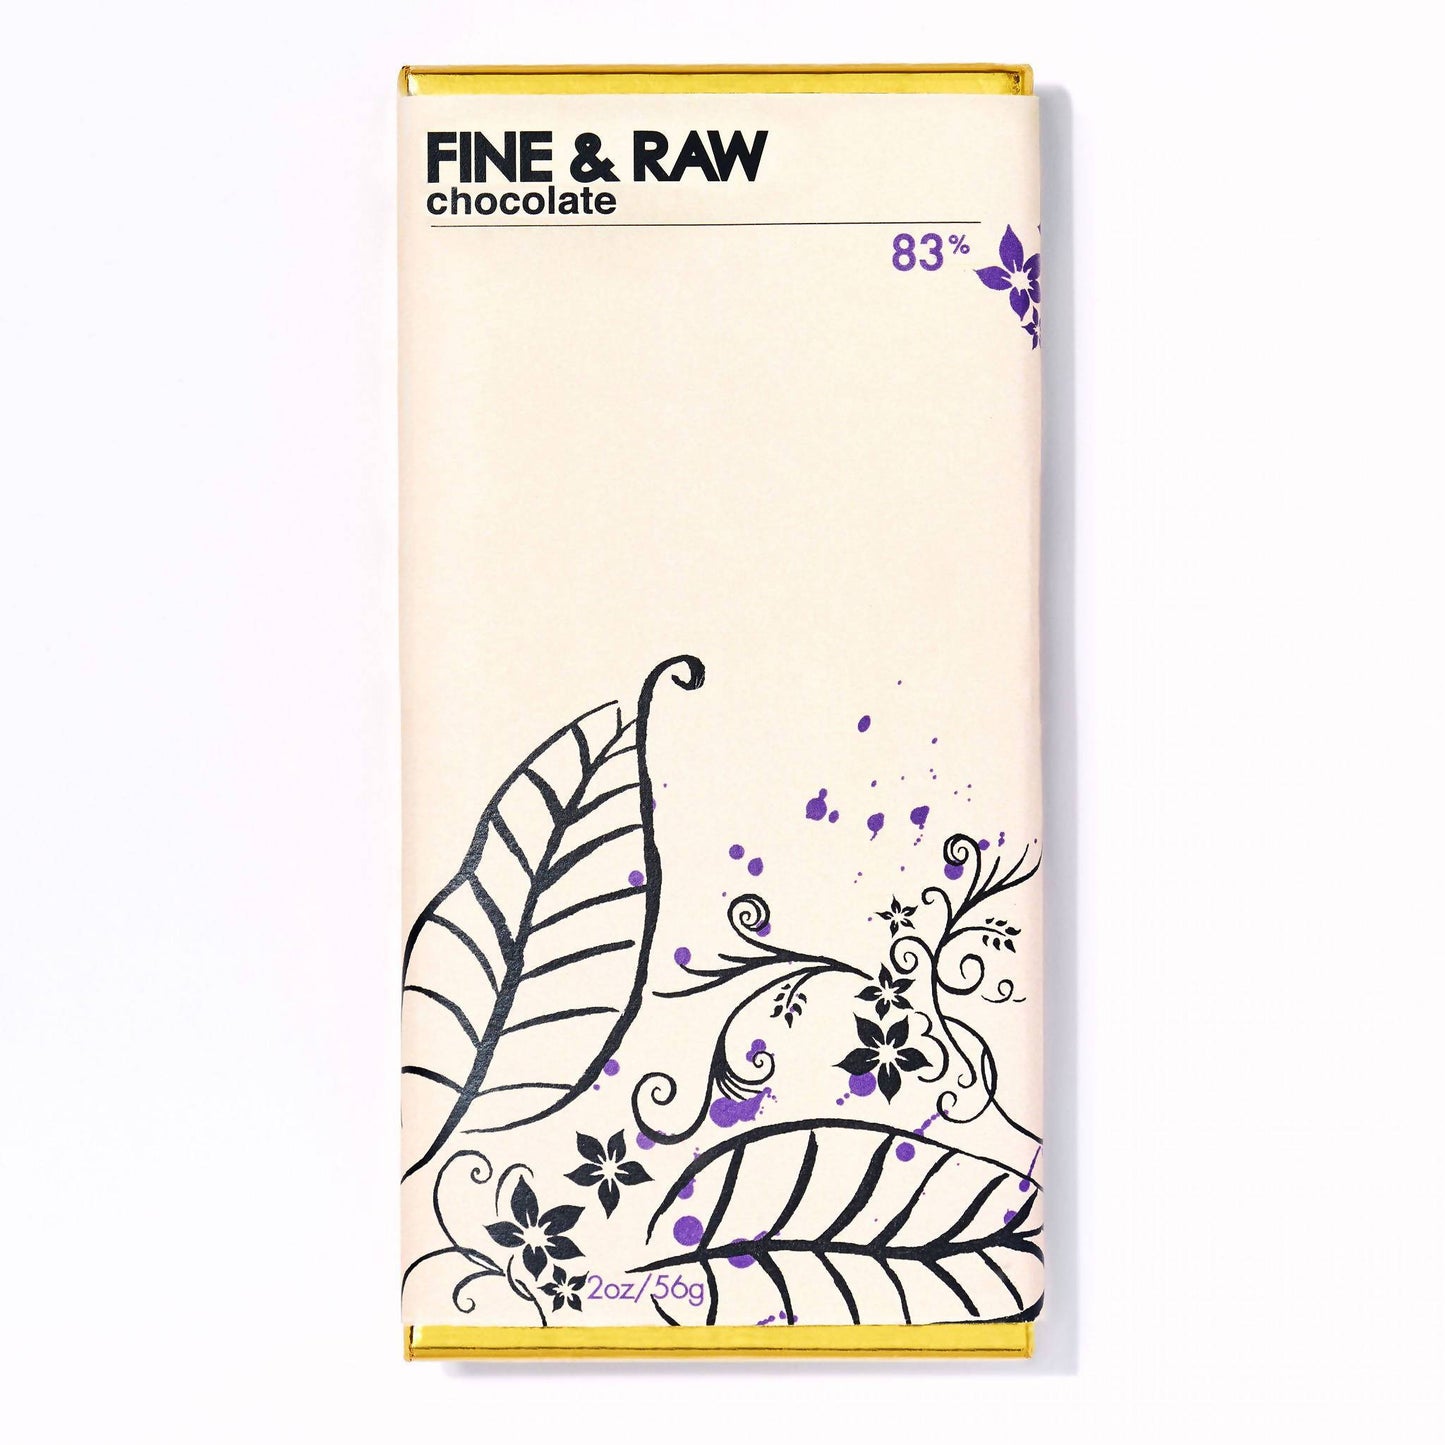 Fine and Raw Dark Chocolate Bars, Organic (83% Cocoa / Cacao) - 10 Bars x 2oz